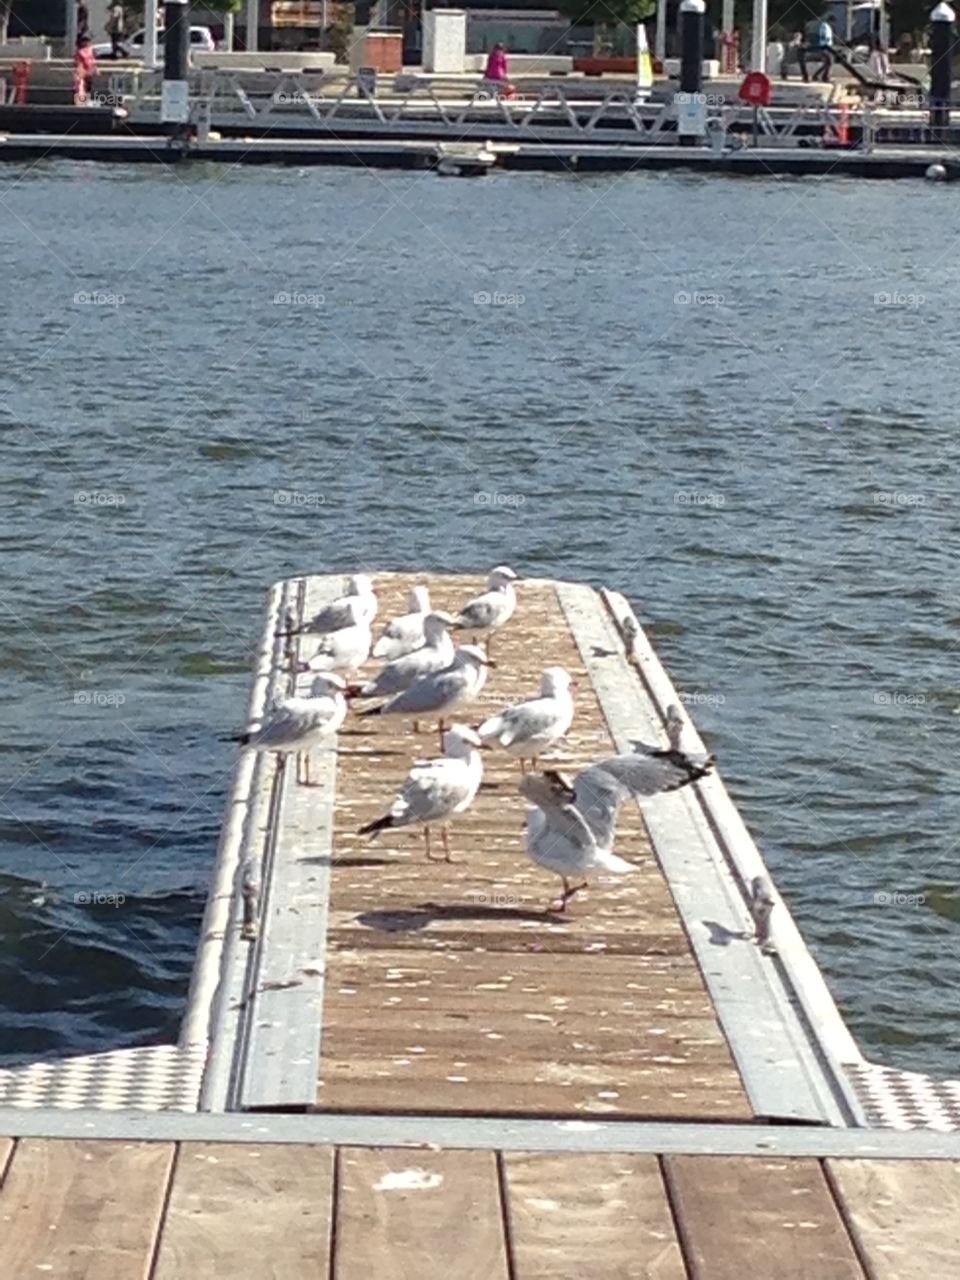 Seagulls at the Elizabeth Quay